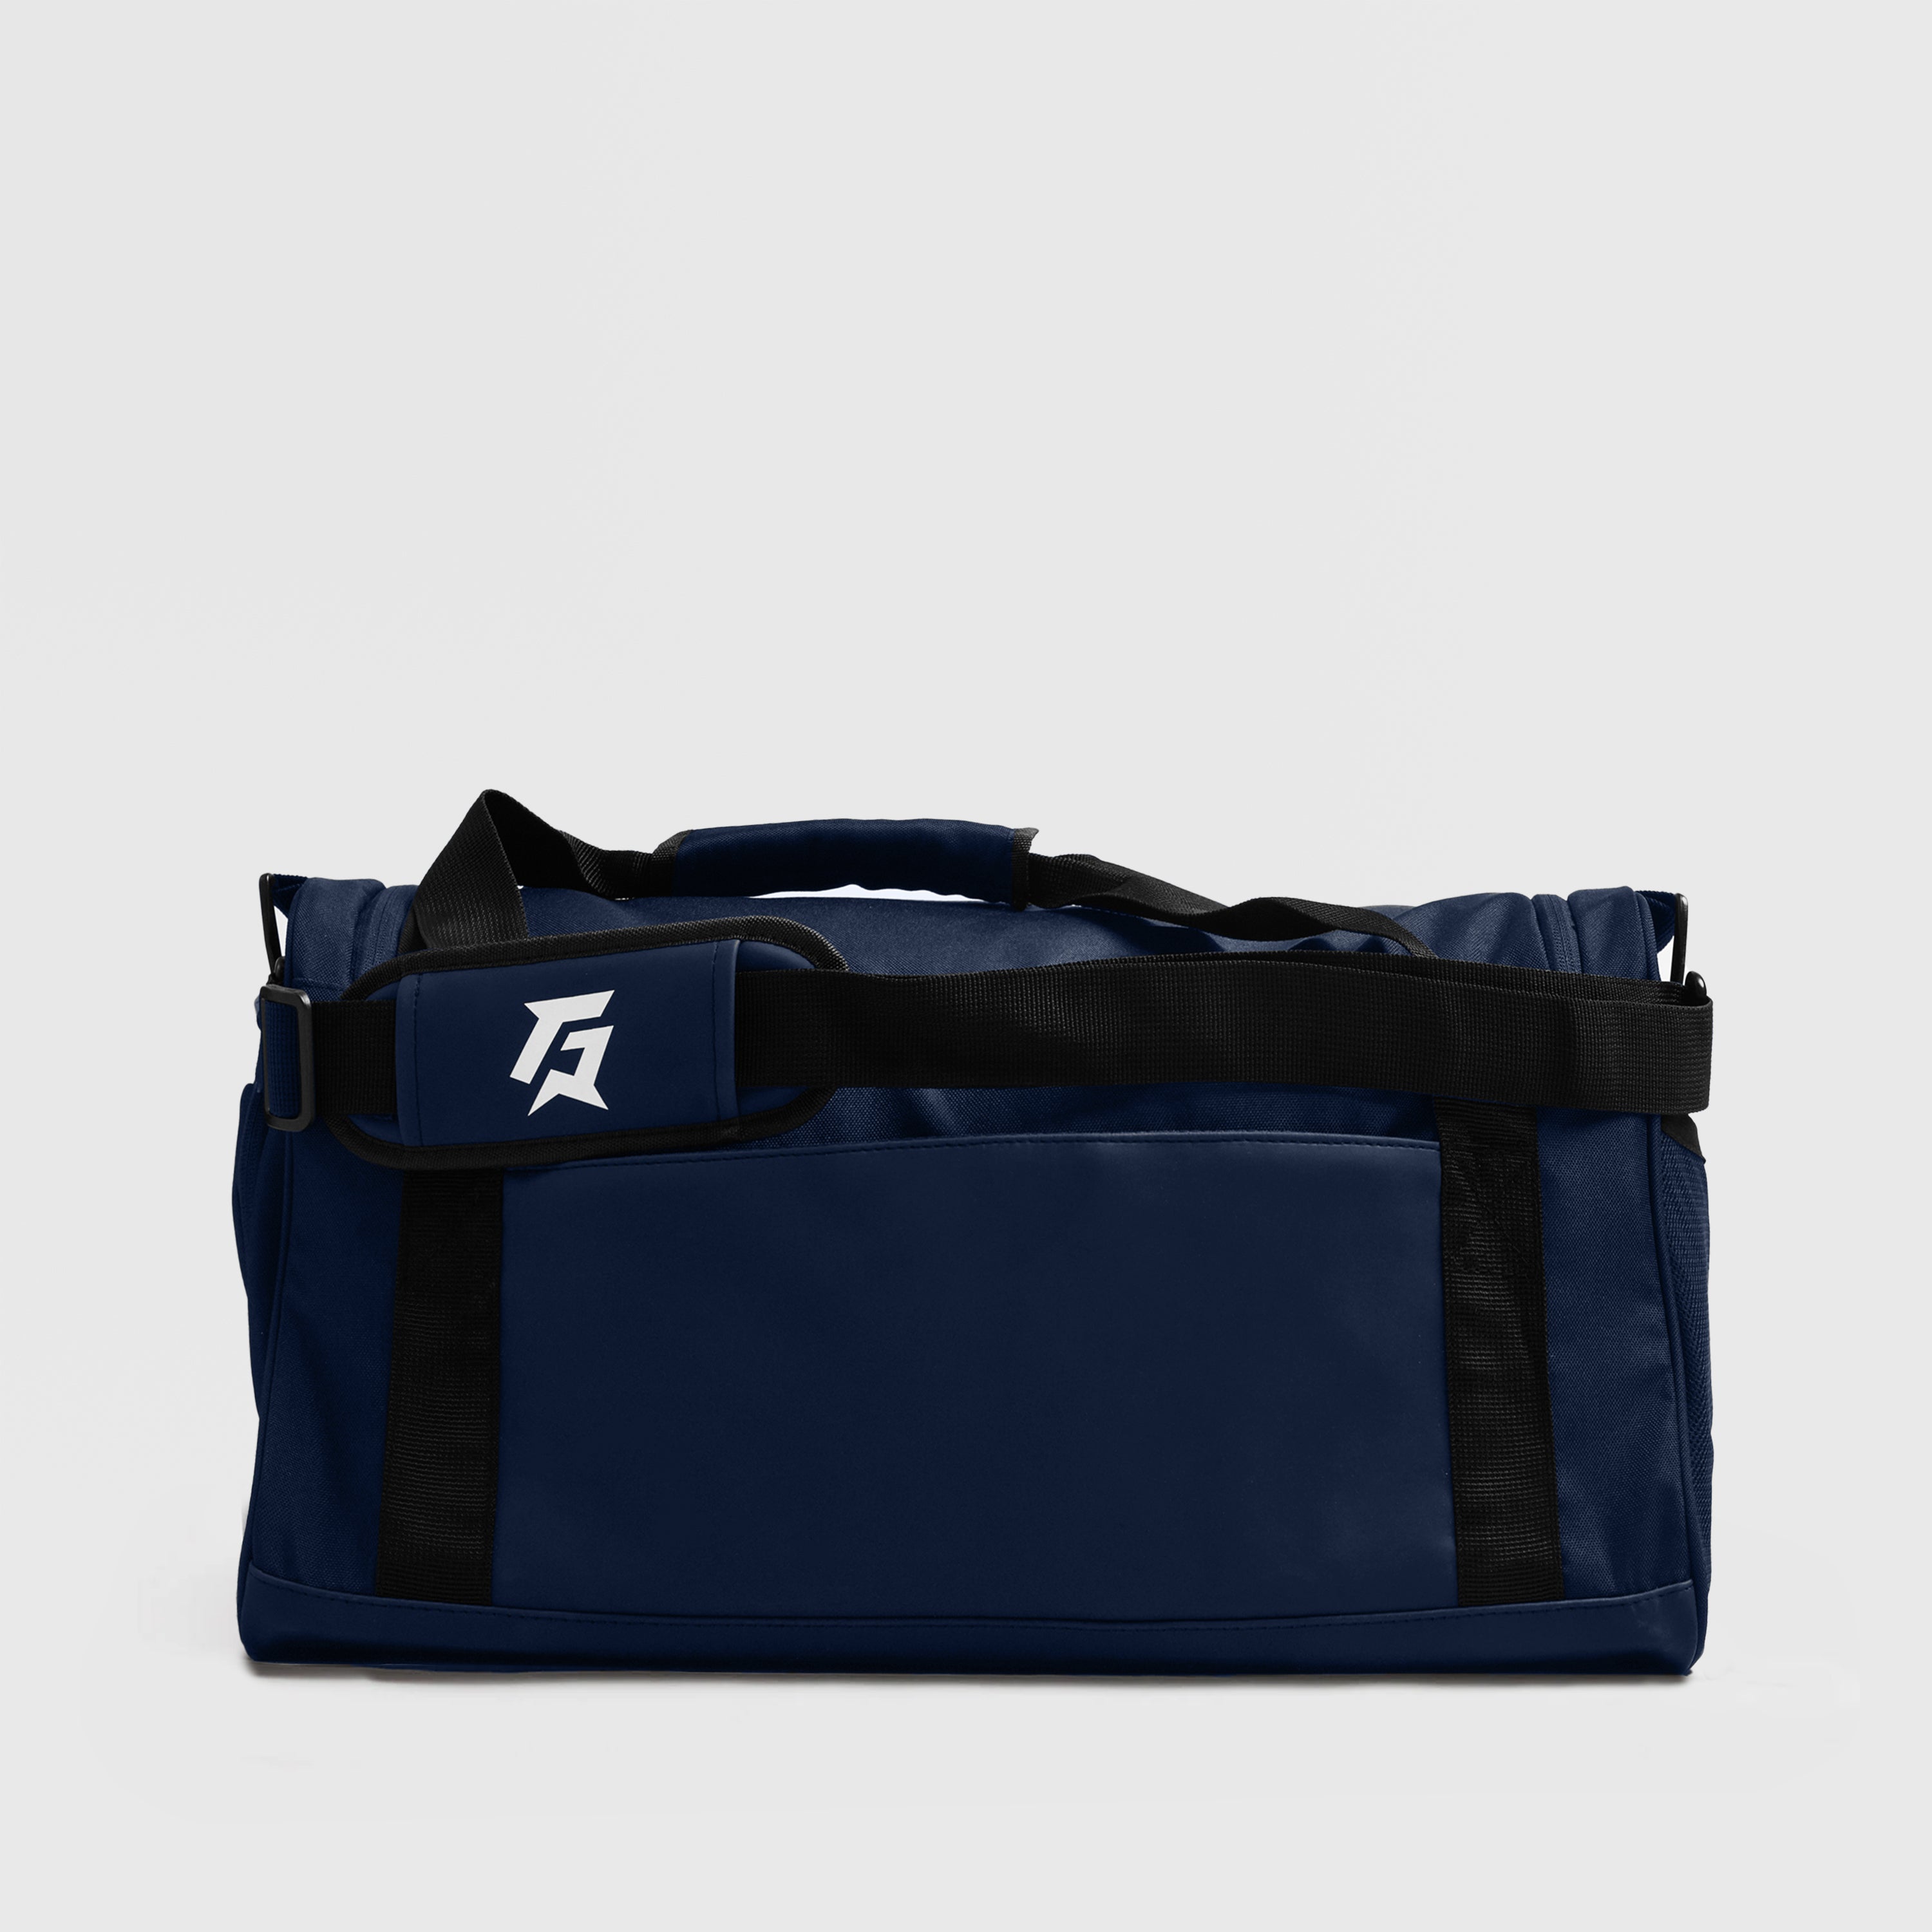 GA Duffle Bag (Navy)